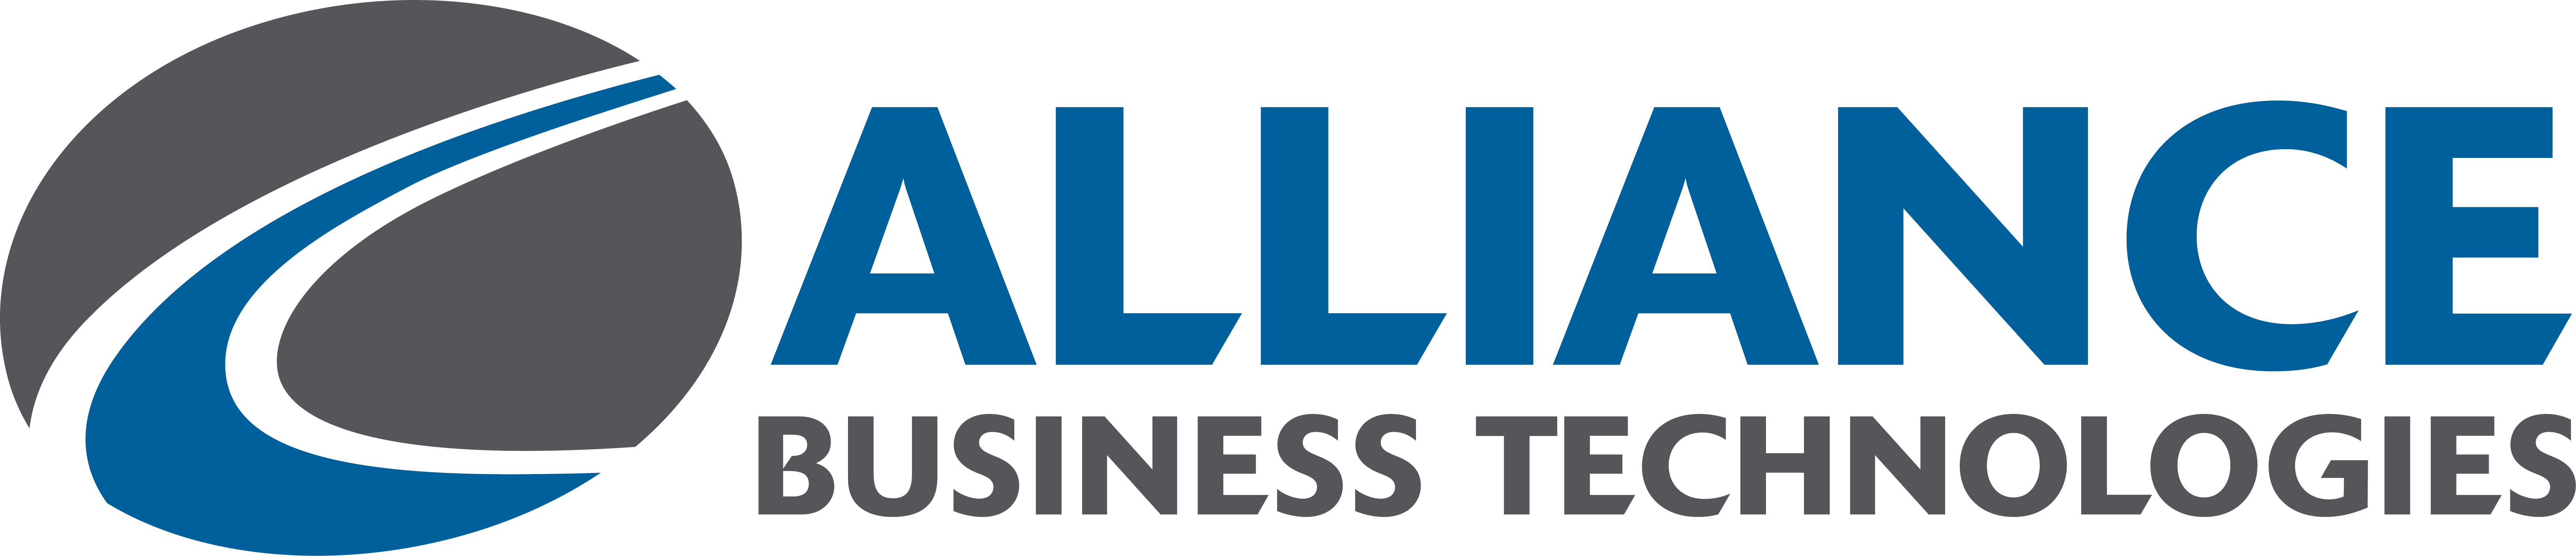 Alliance Business Technologies